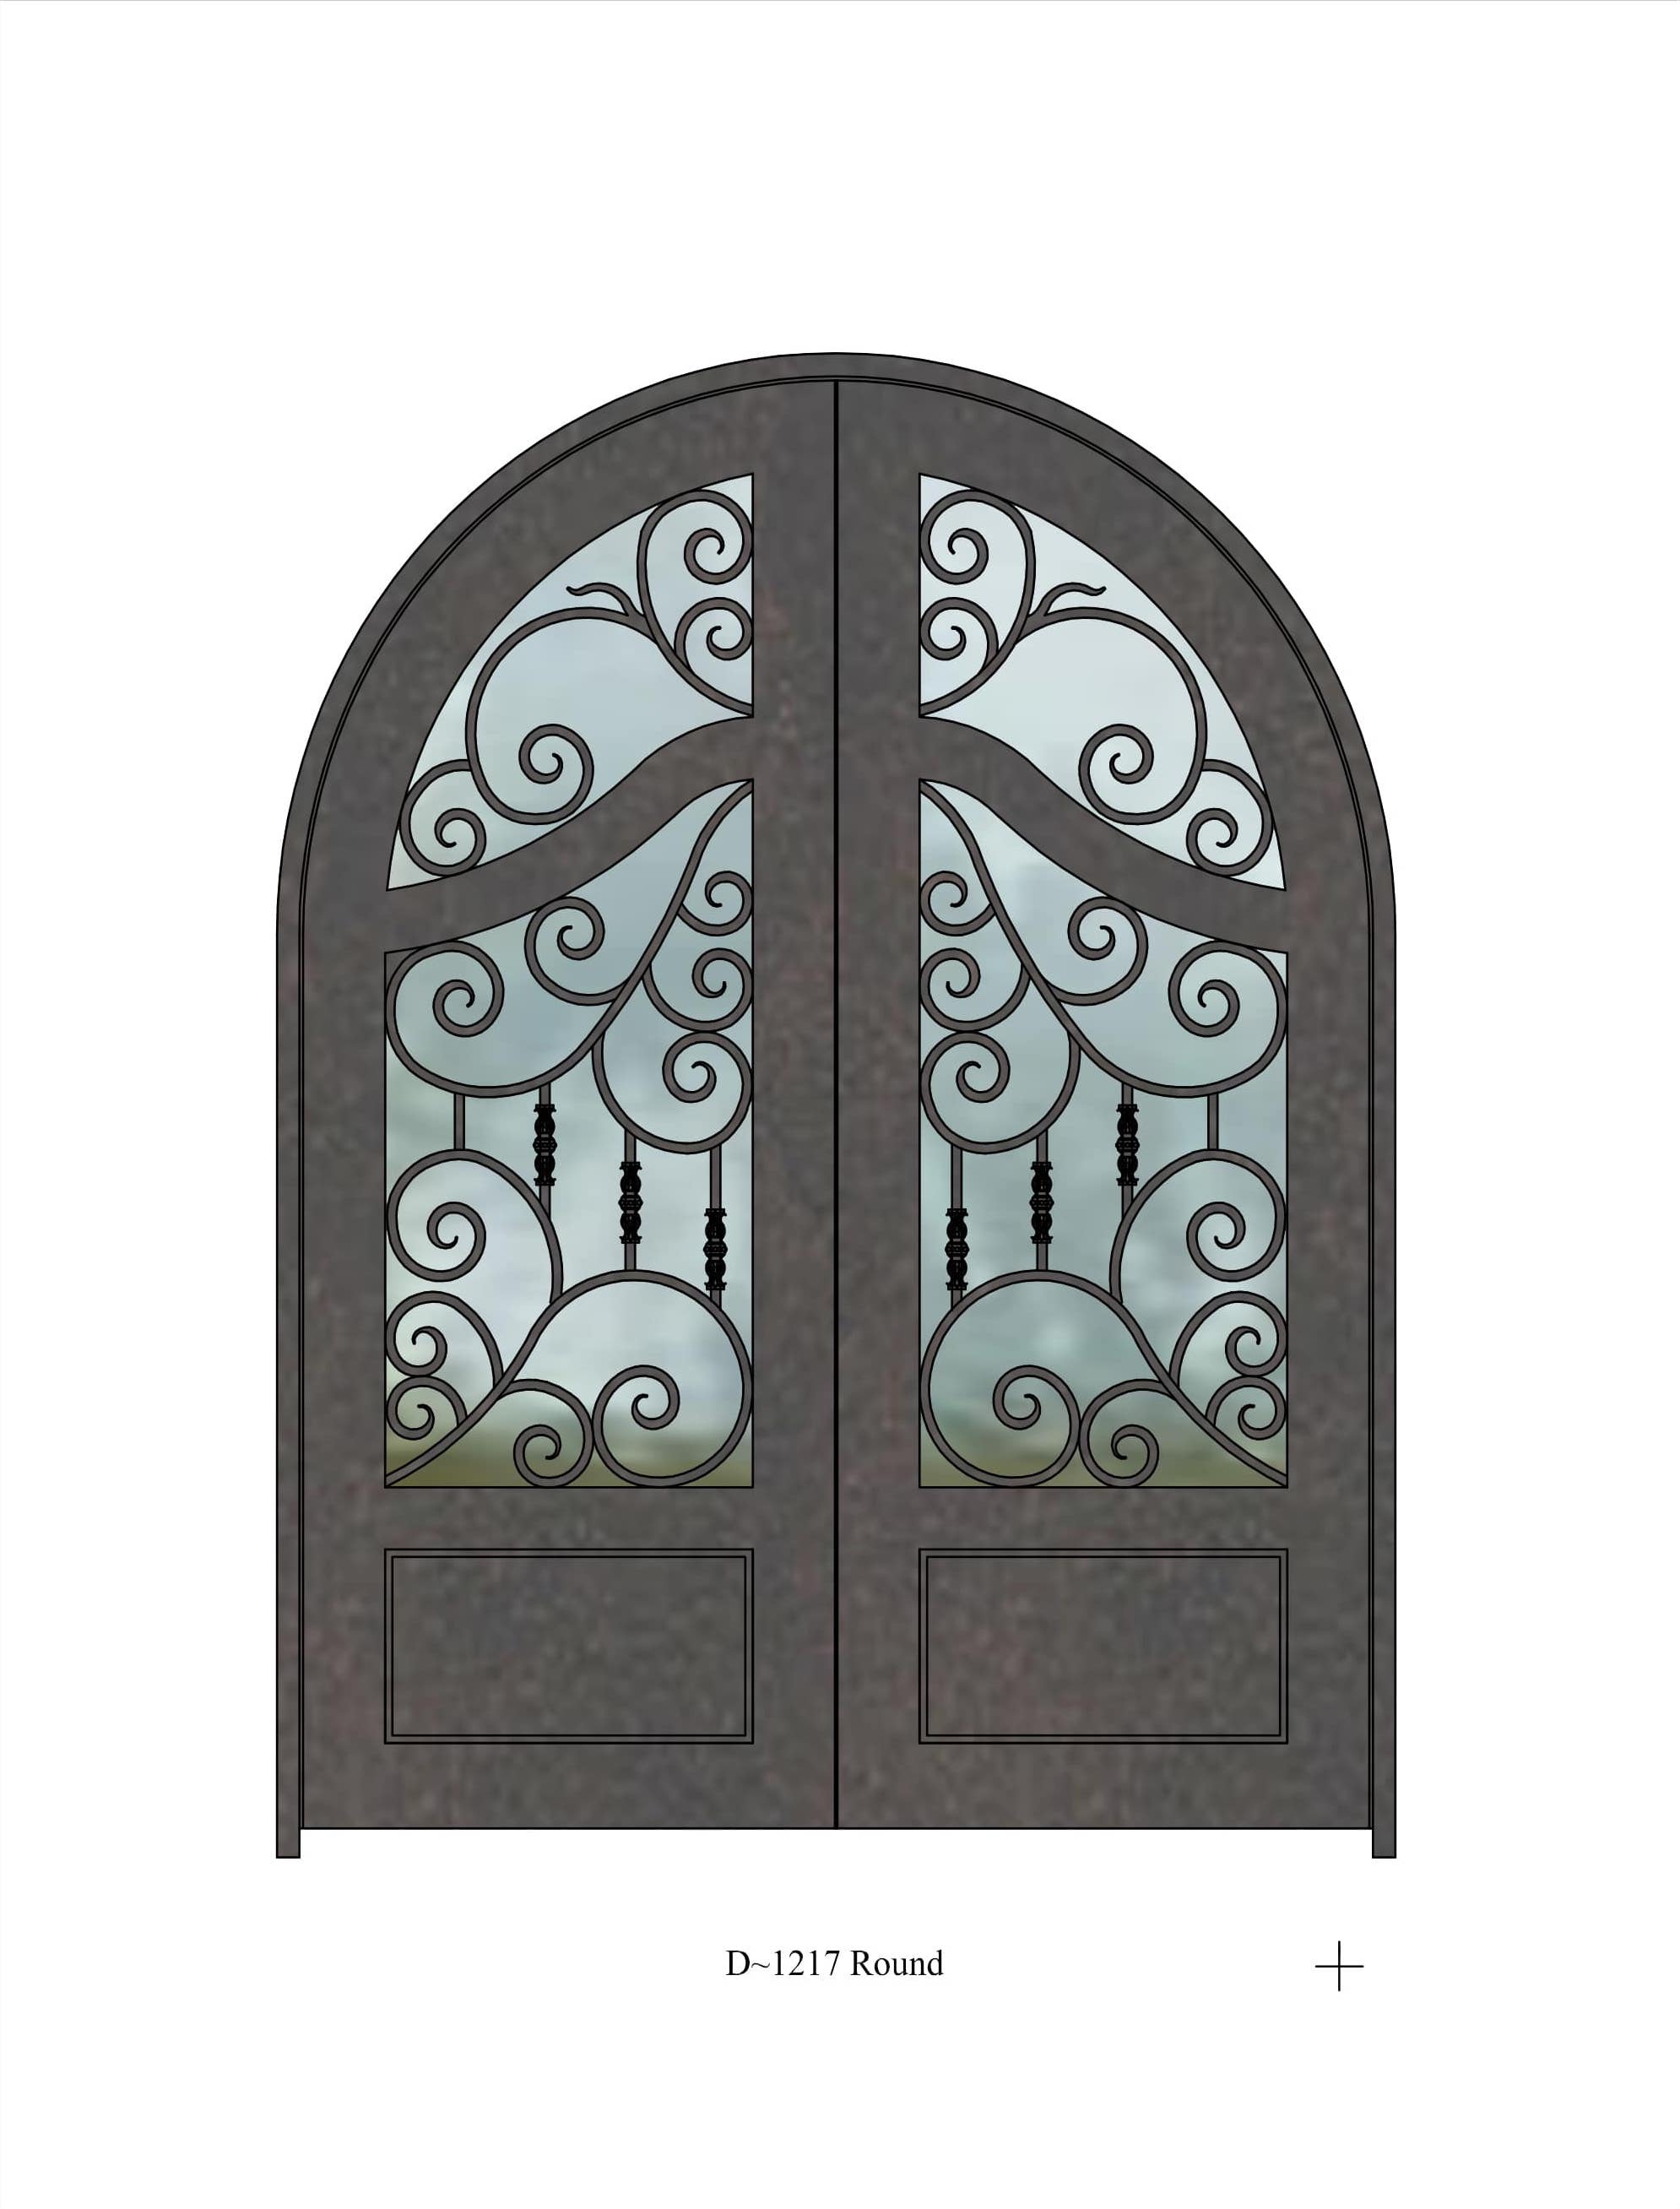 Round top door with intricate ironwork pattern over window